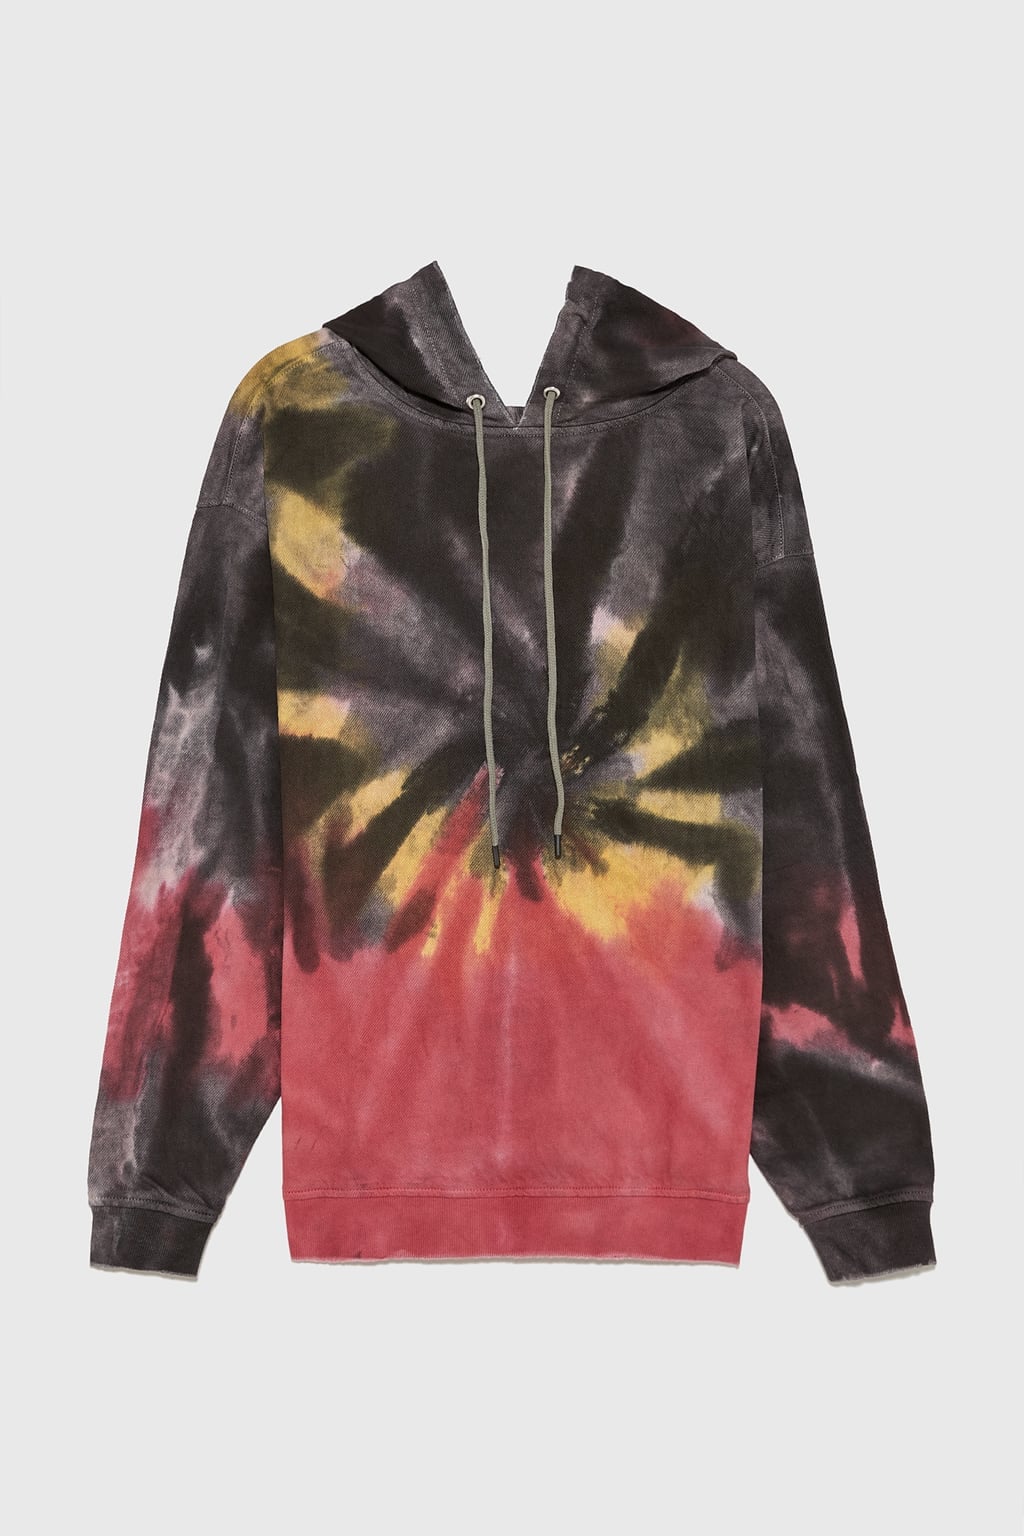 Zara Tie-Dye Print Sweatshirt | We Now 